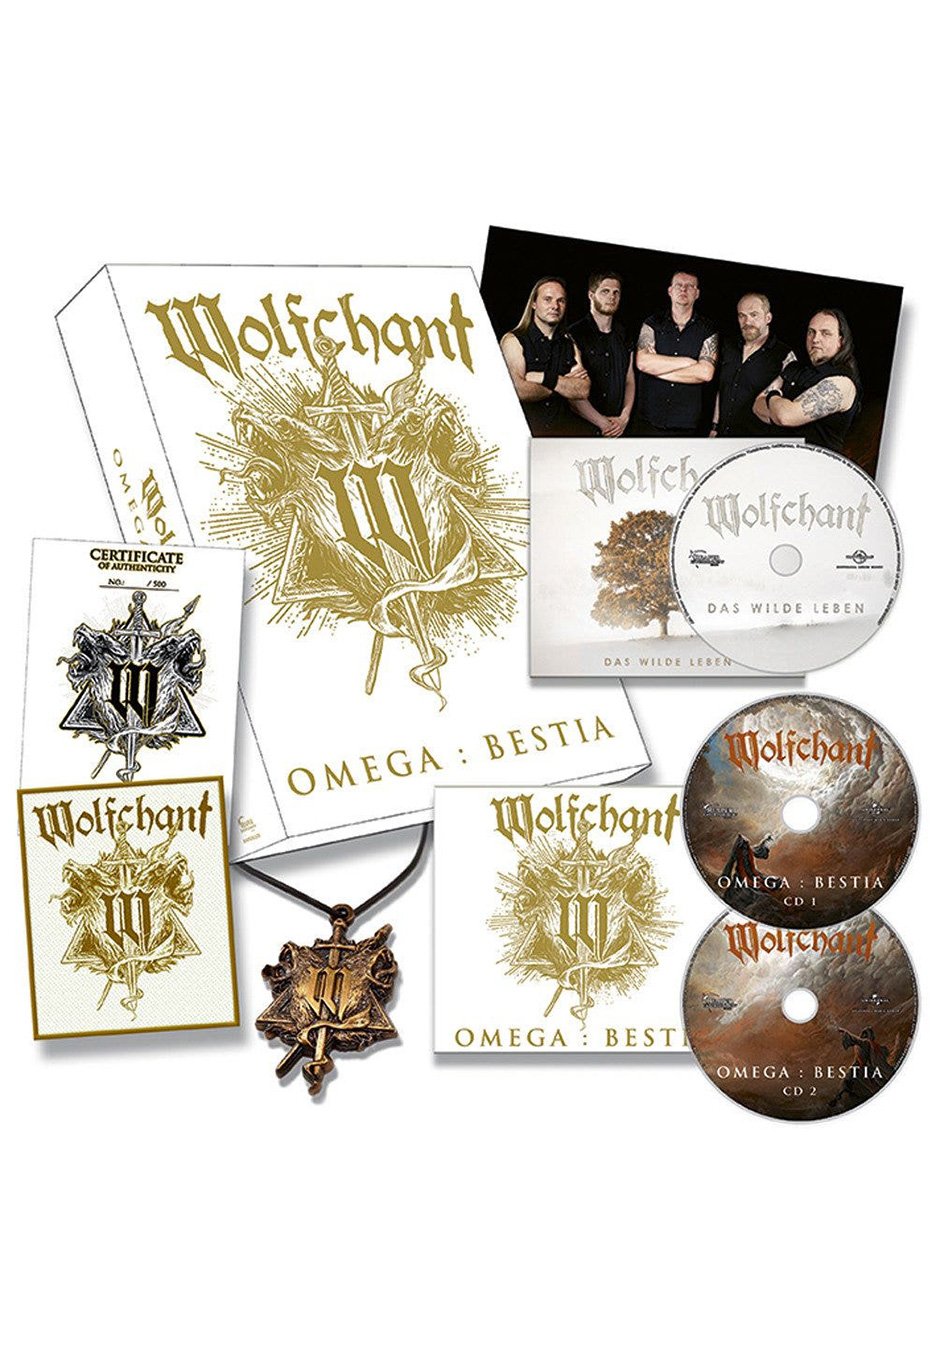 Wolfchant - Omega : Bestia Deluxe - CD Boxset